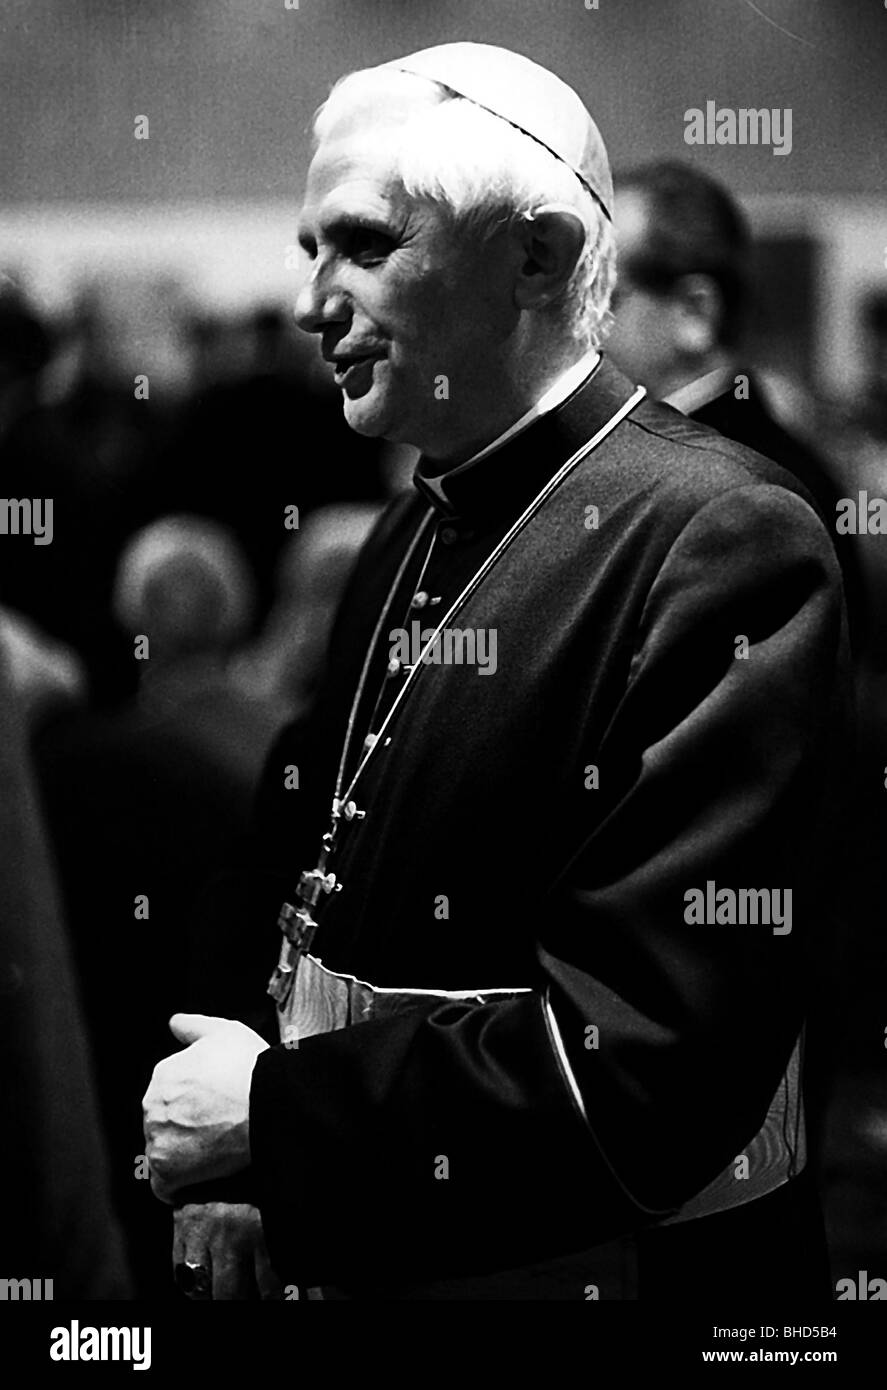 Benedict VI (Josef Ratzinger), * 16.4.1927, pope since 19.4.2005, half length, giving a speech, during the Romano Guardini Award ceremony, 3.2.1985, Stock Photo